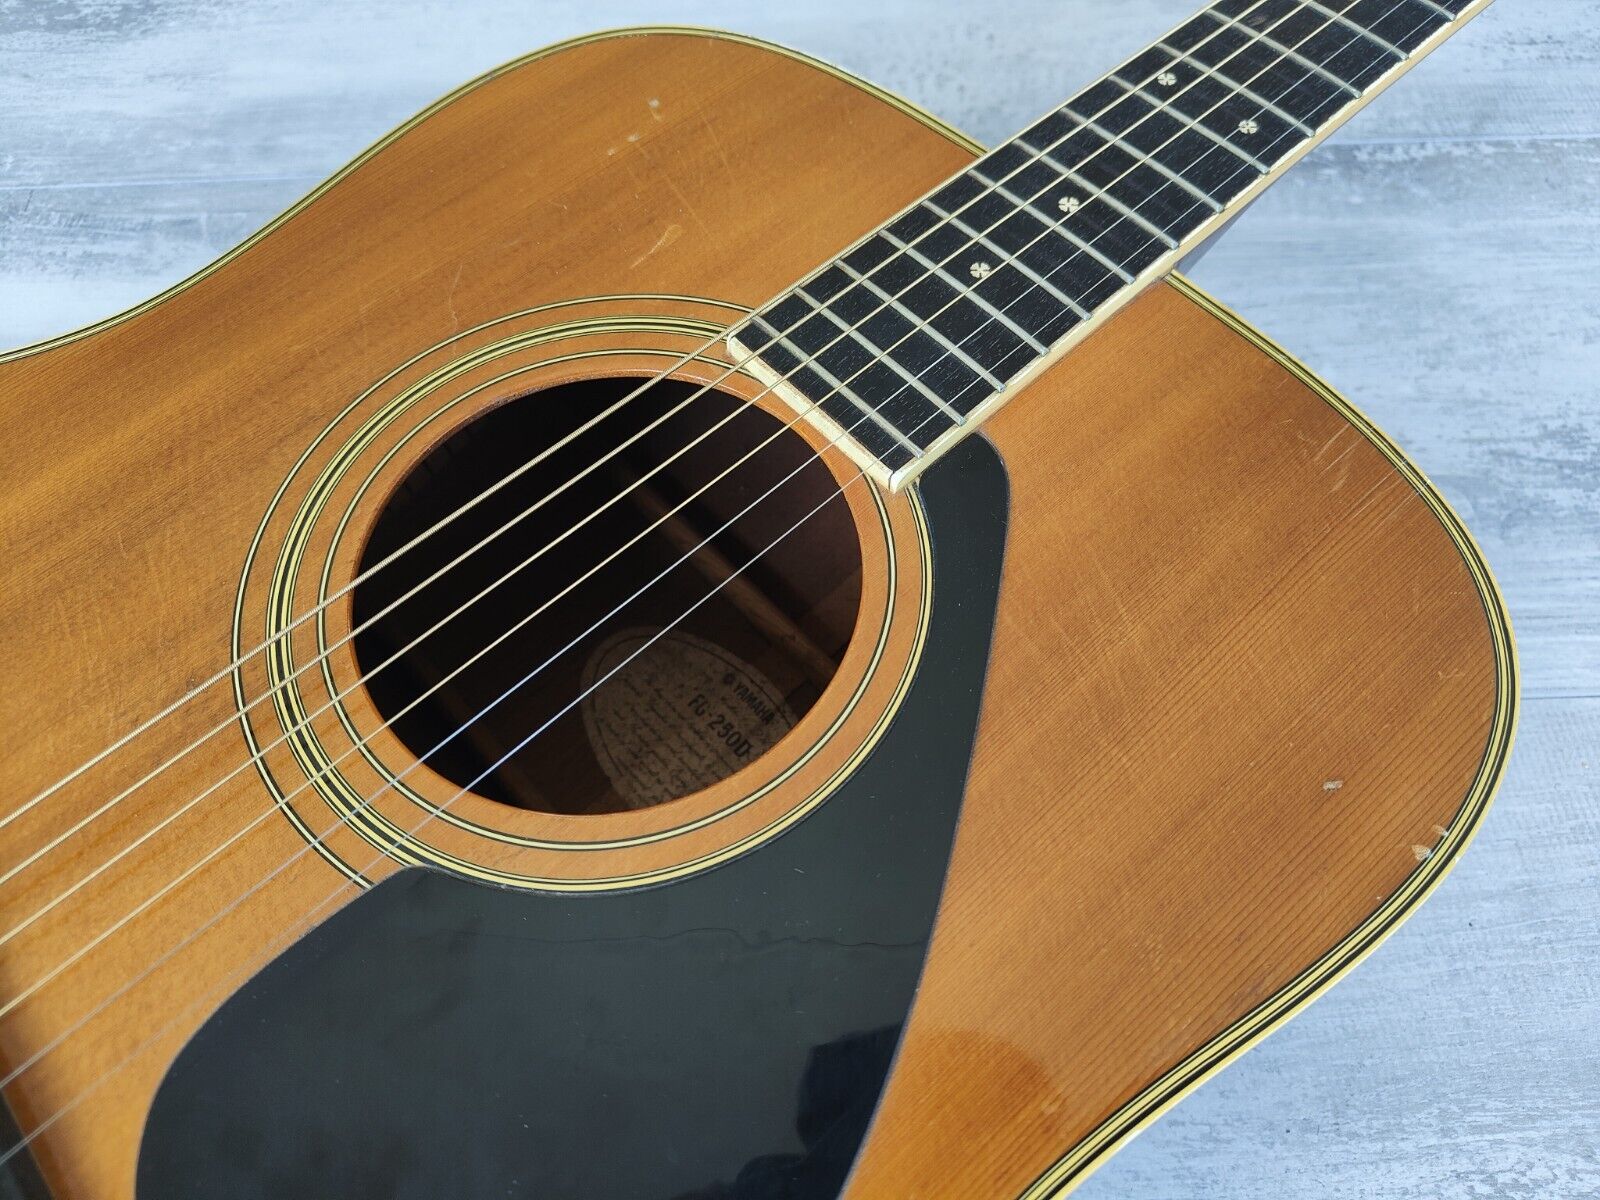 1981 Yamaha FG-250D Japanese Vintage Dreadnought Acoustic Guitar (Natural)